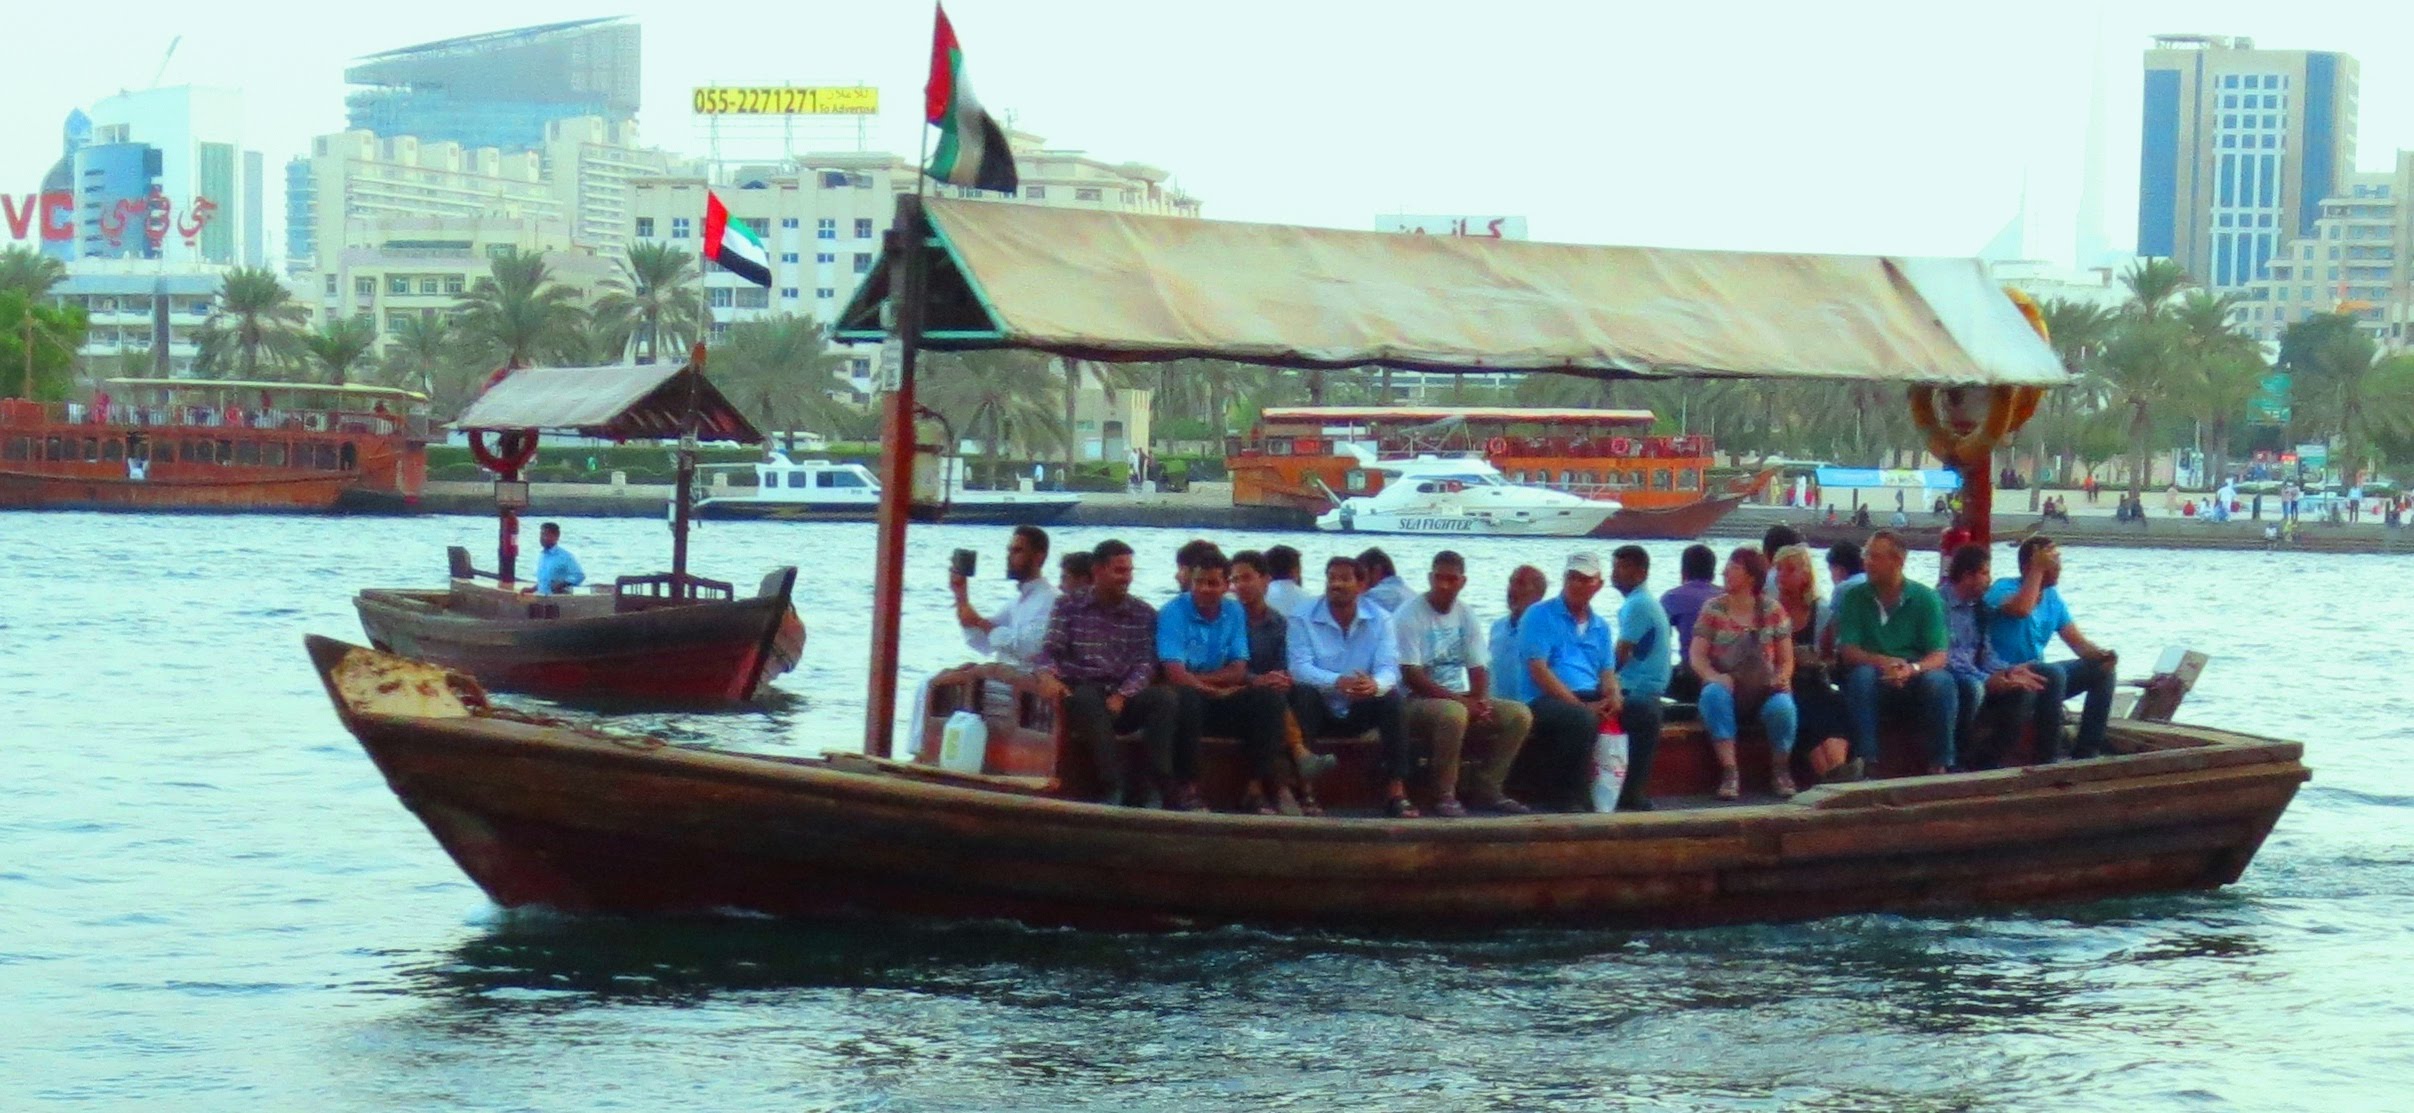 ABRA DUBAI - Wooden Boat Ride - Dubai Creek - YouTube